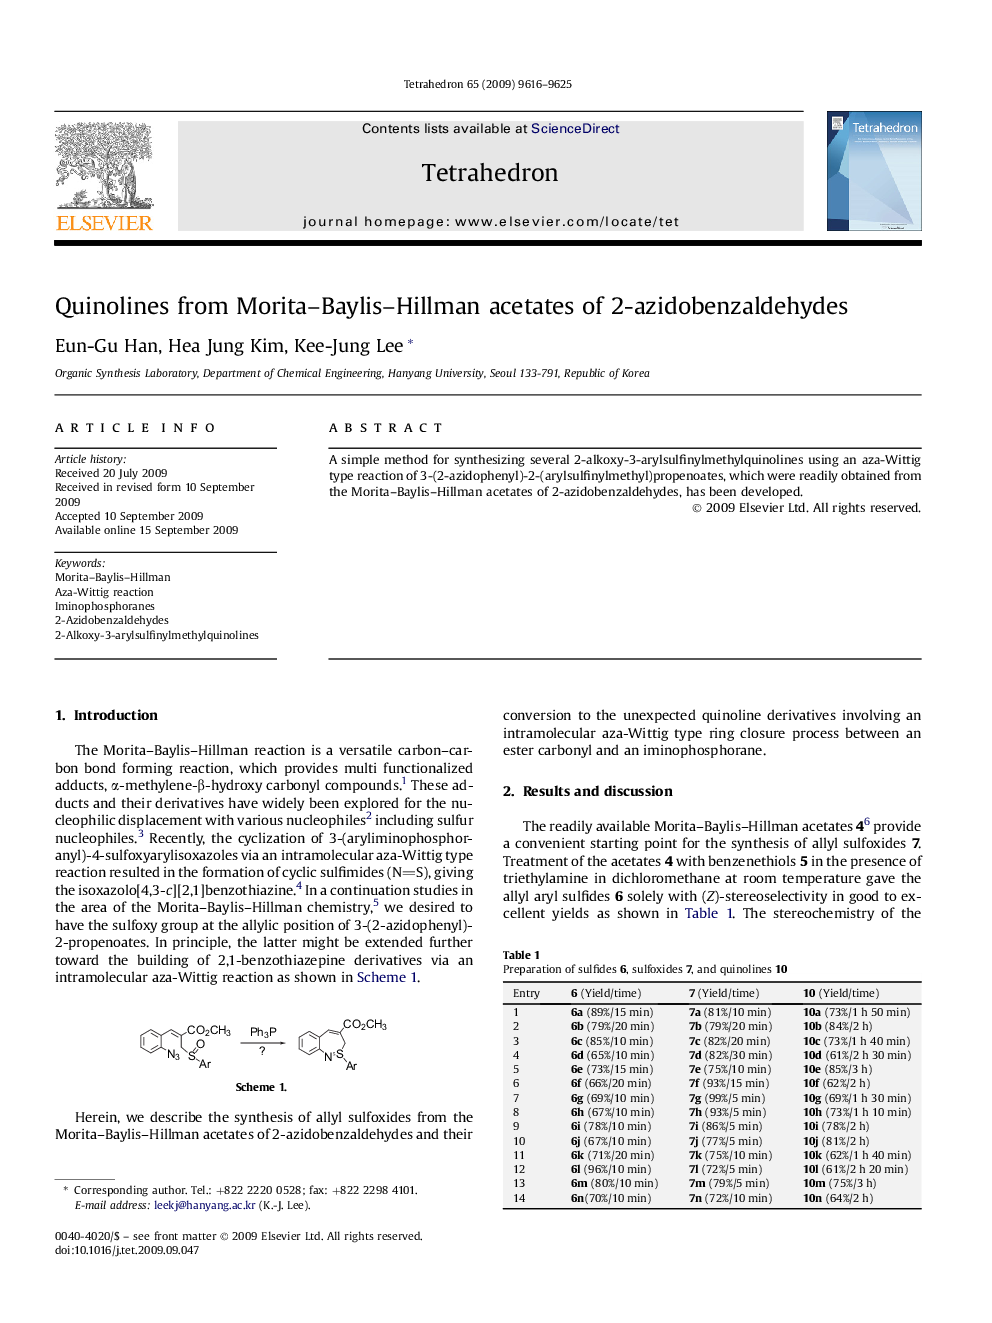 Quinolines from Morita-Baylis-Hillman acetates of 2-azidobenzaldehydes